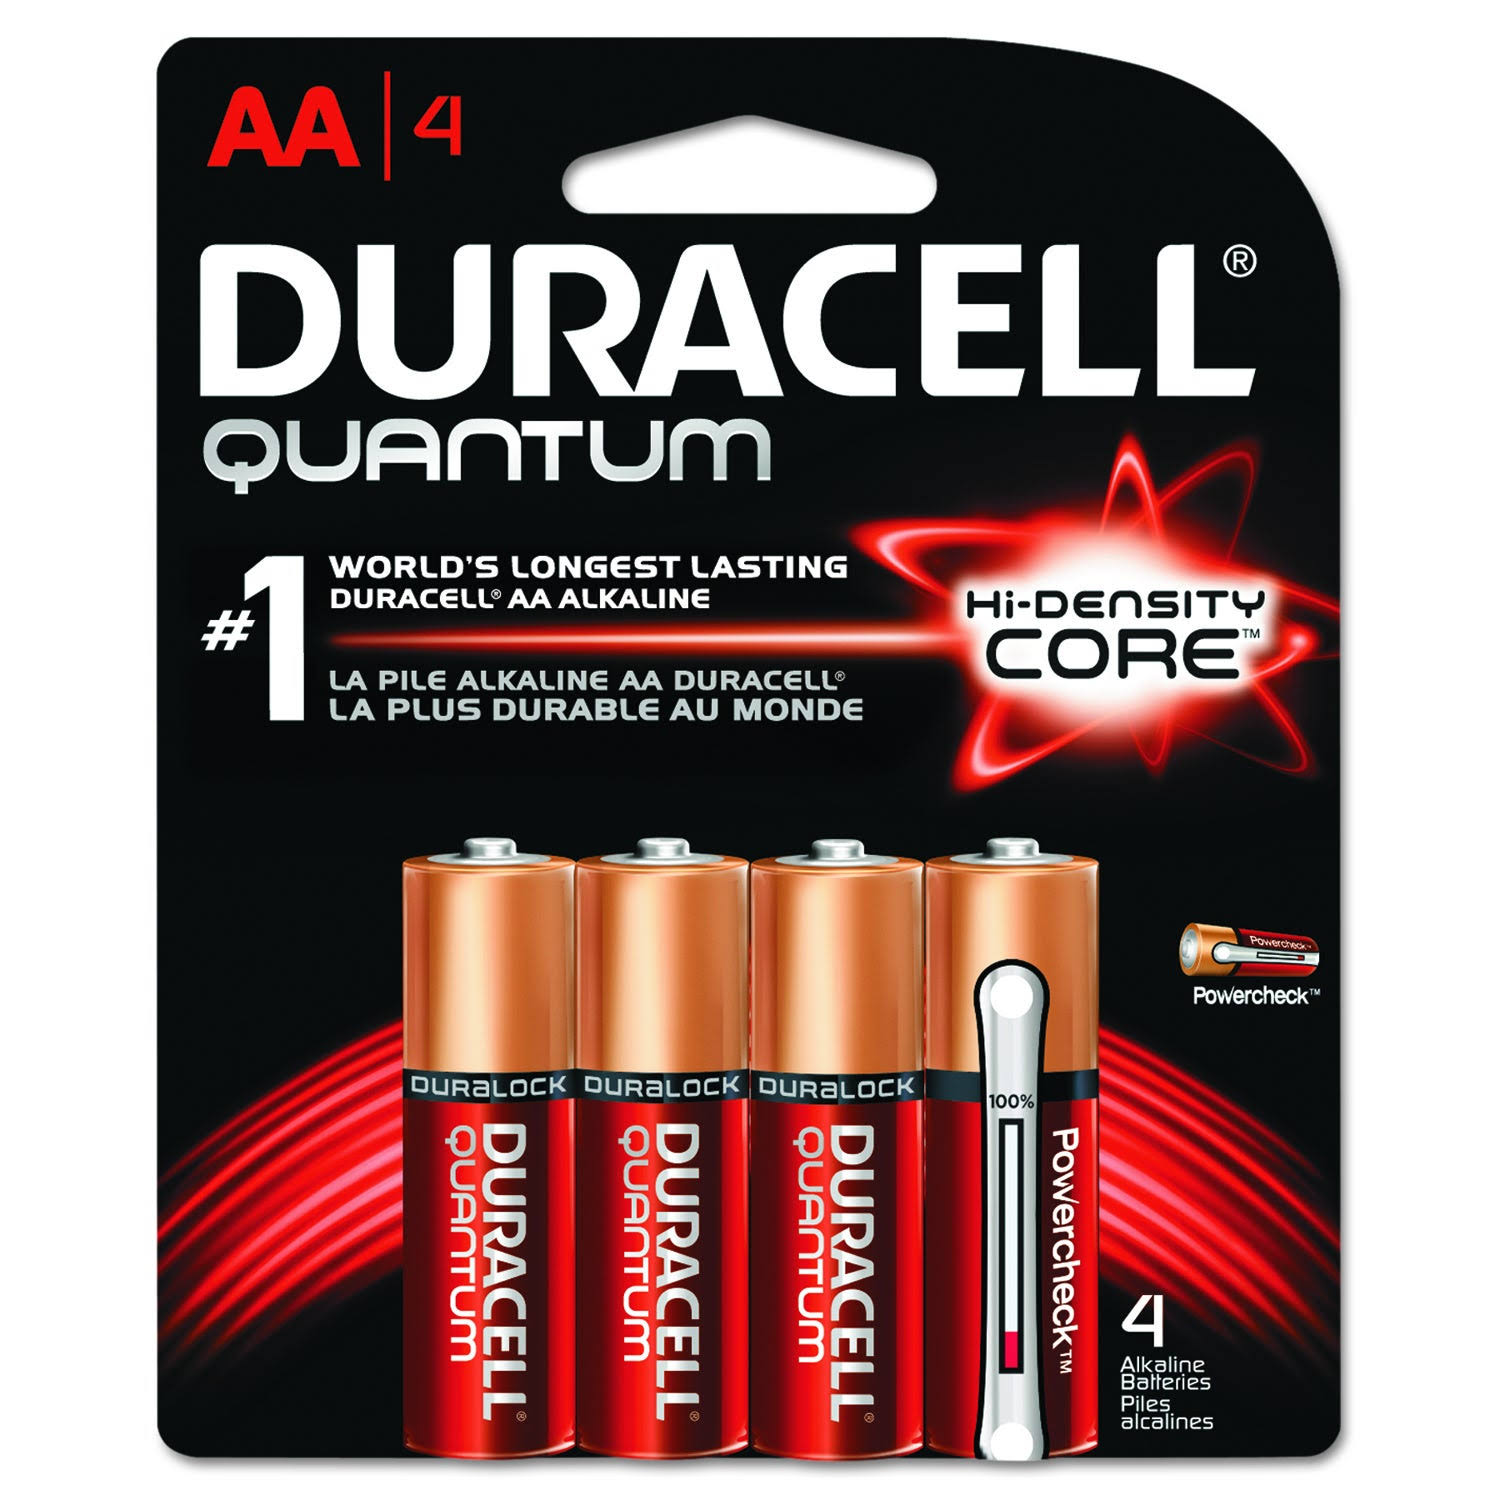 Duracell Quantum Alkaline AA Battery - 4 Pack